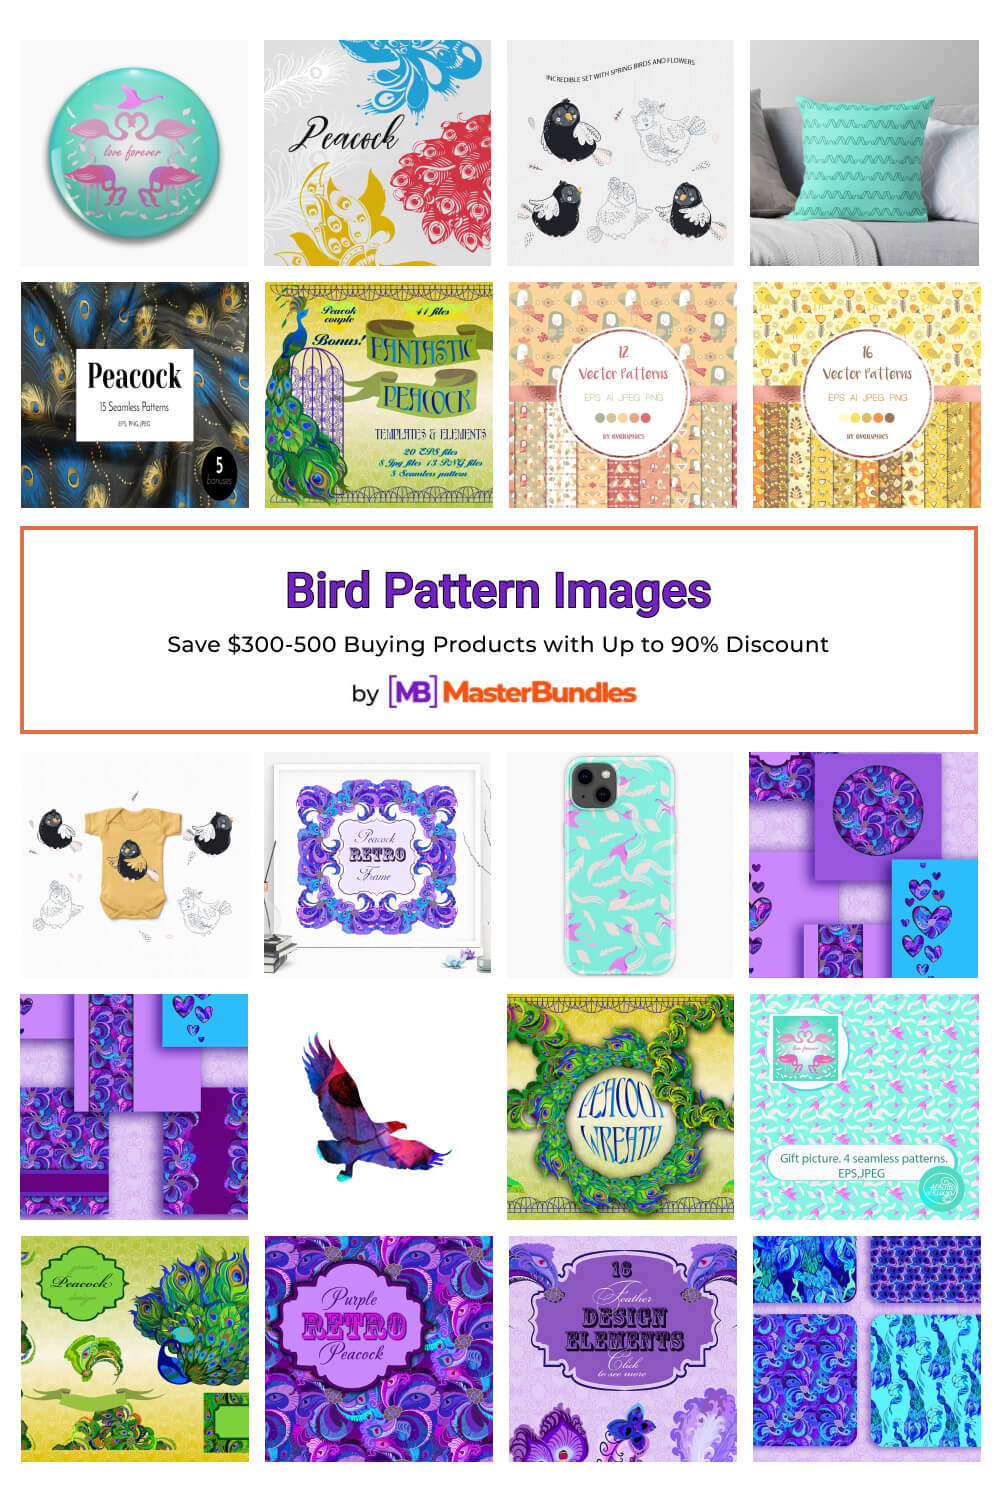 bird pattern images pinterest image.